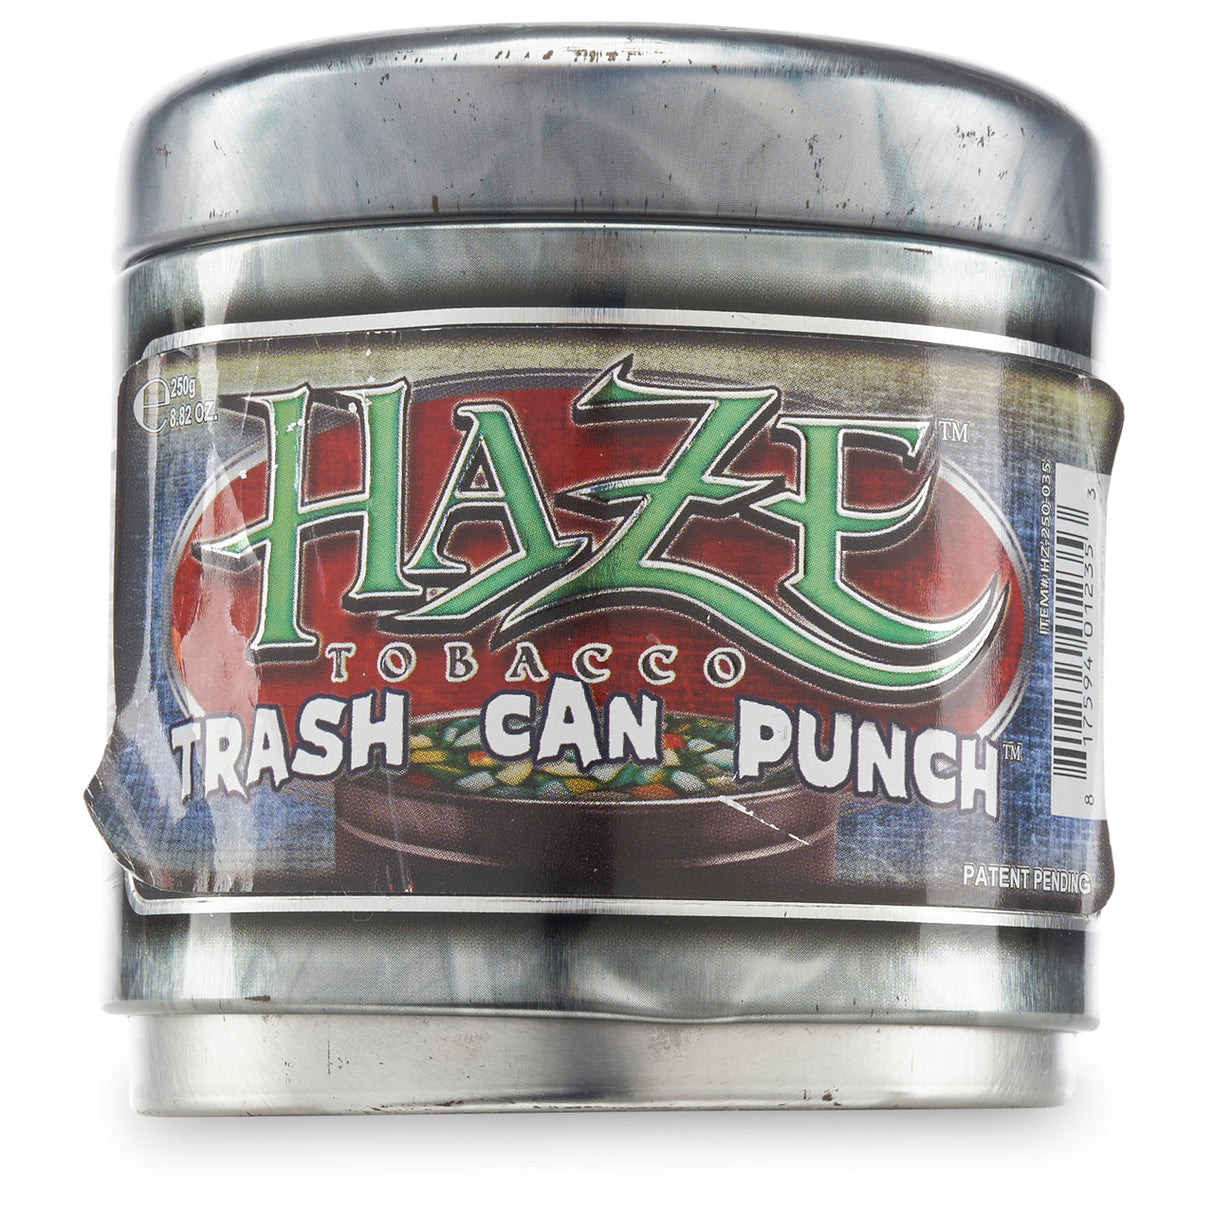 Haze Premium Tobacco Shisha for Hookah 250g